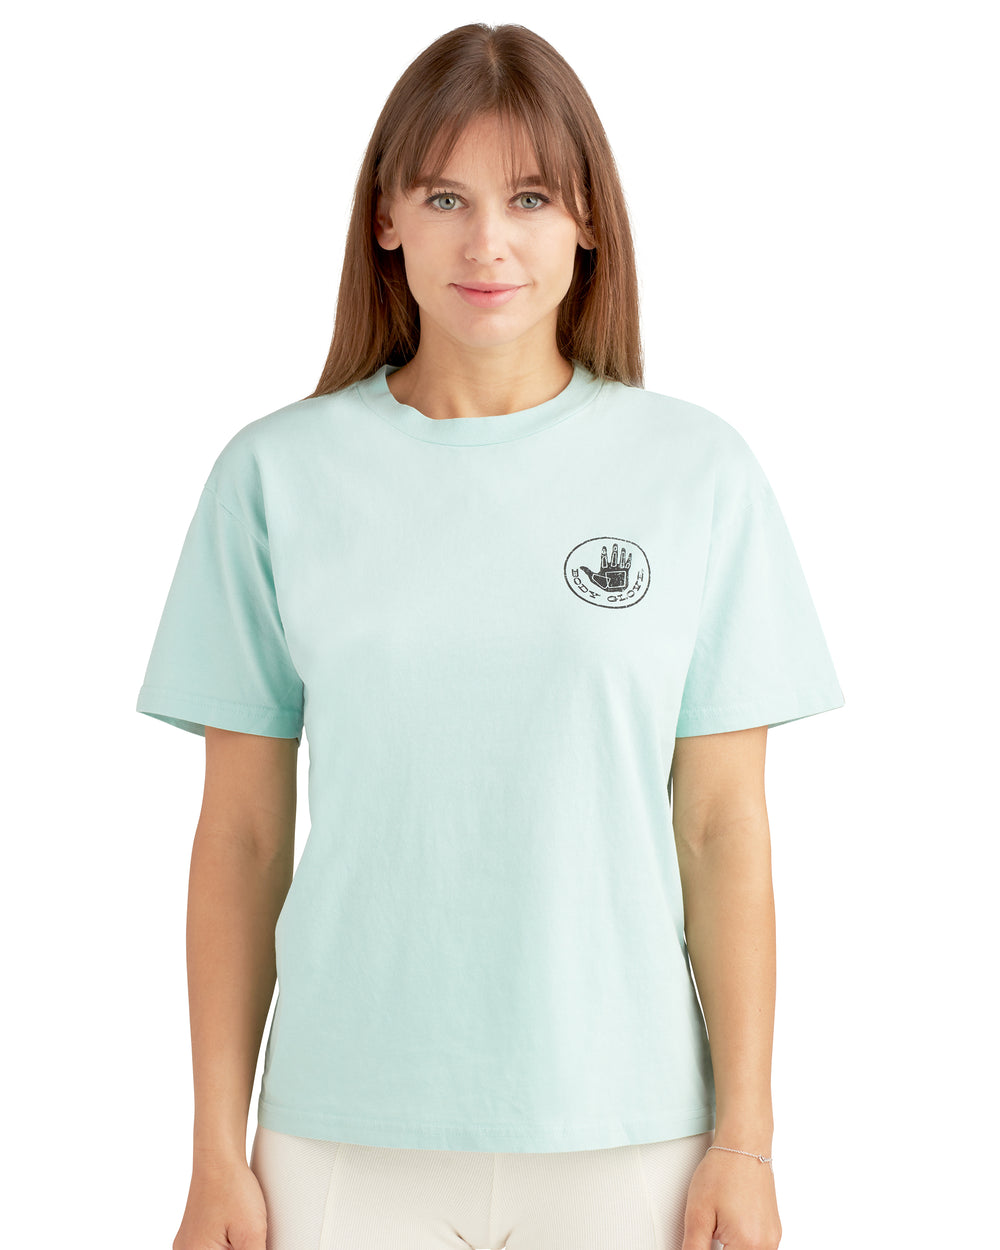 Salt Water Taffy T-Shirt - Aqua